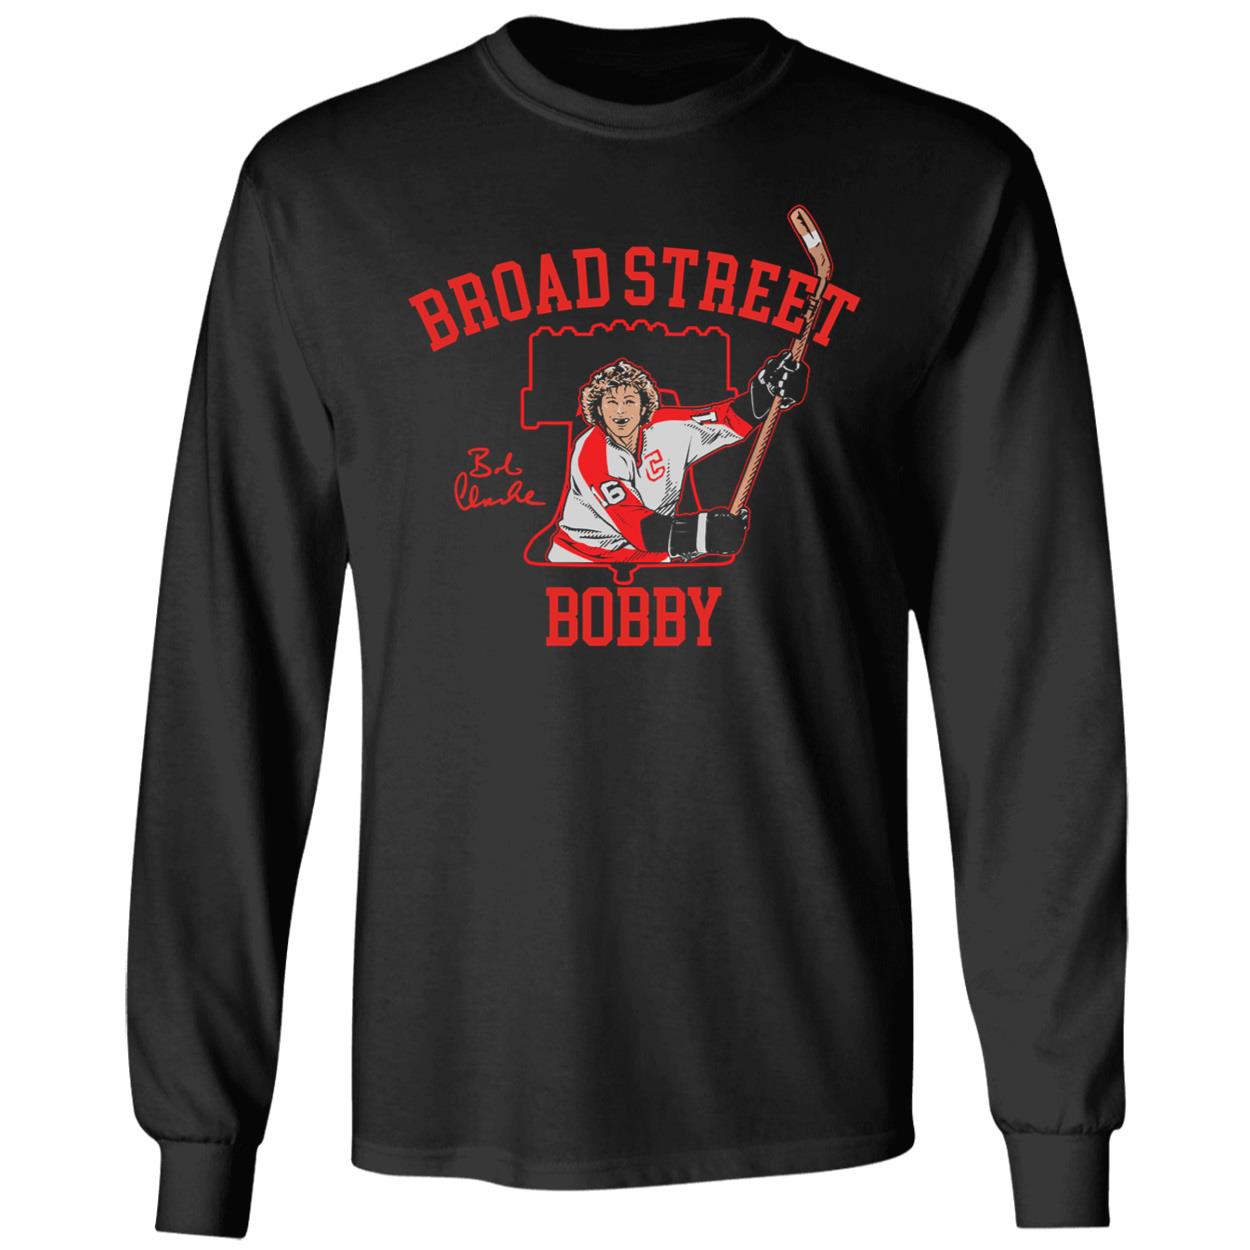 Bobby Clarke Broad Street Bobby T-shirt